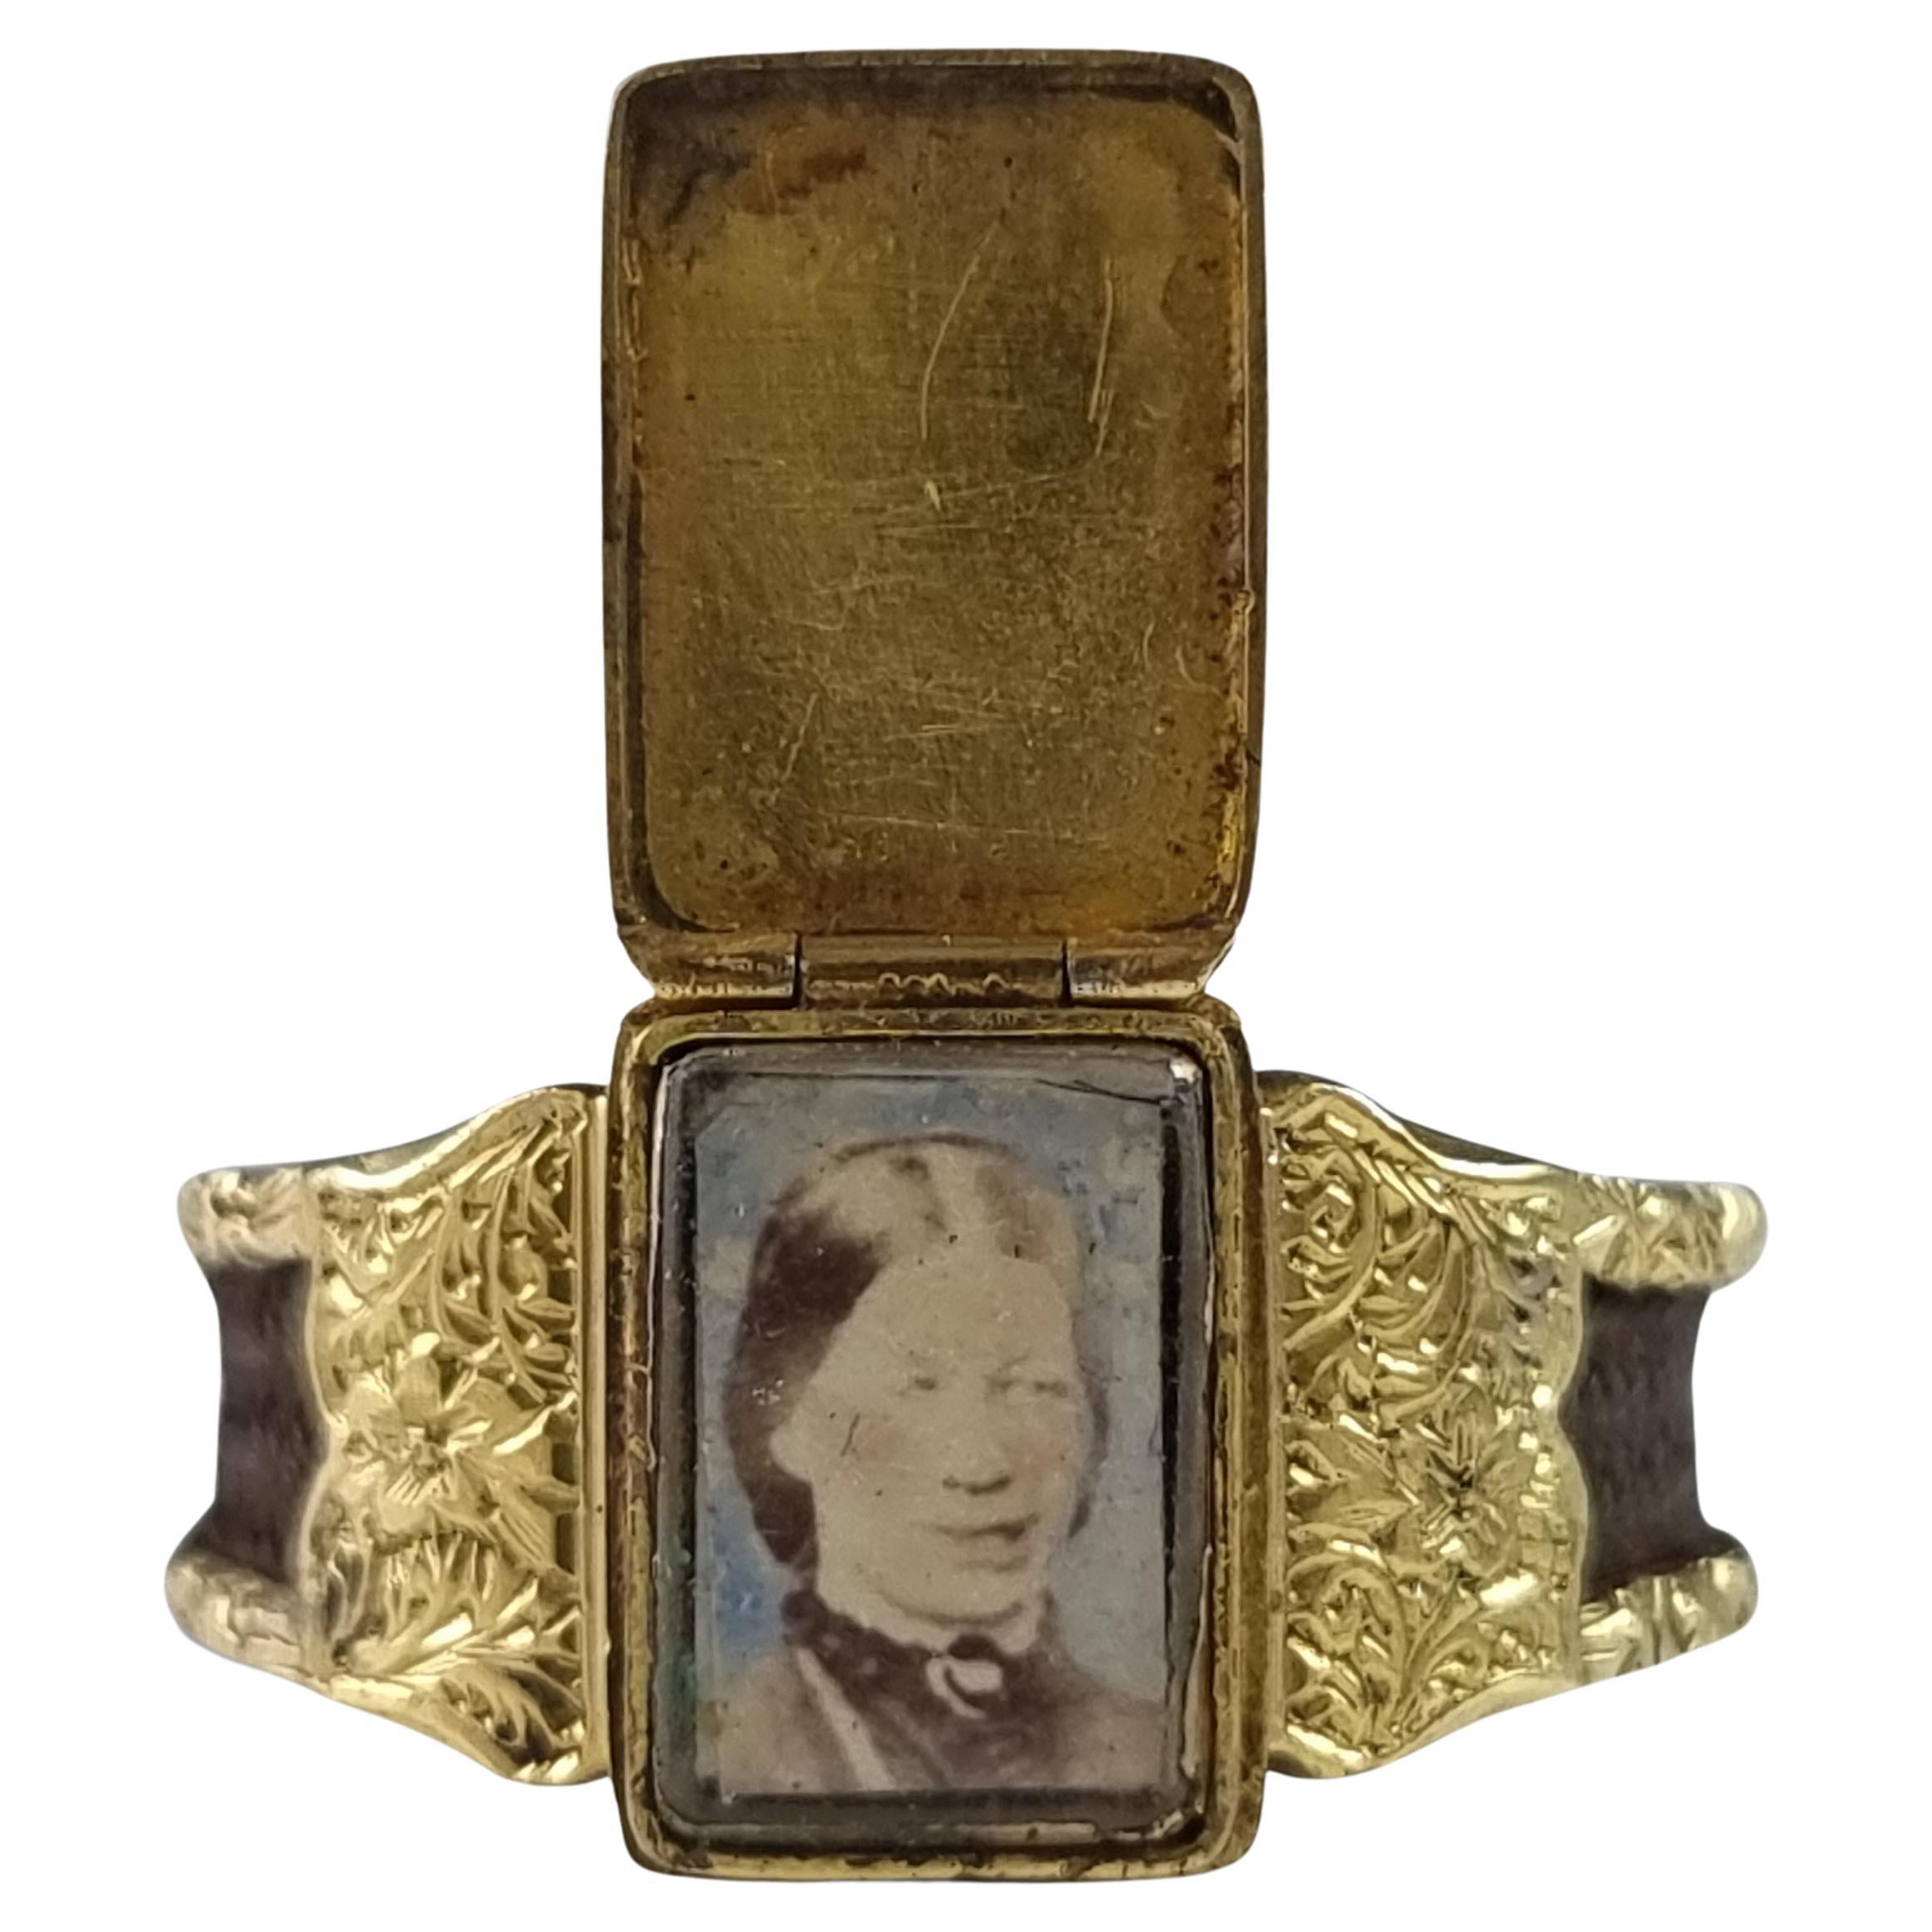 Victorian 15ct Gold Sentimental Memorial Portrait Hair Ring, 1873